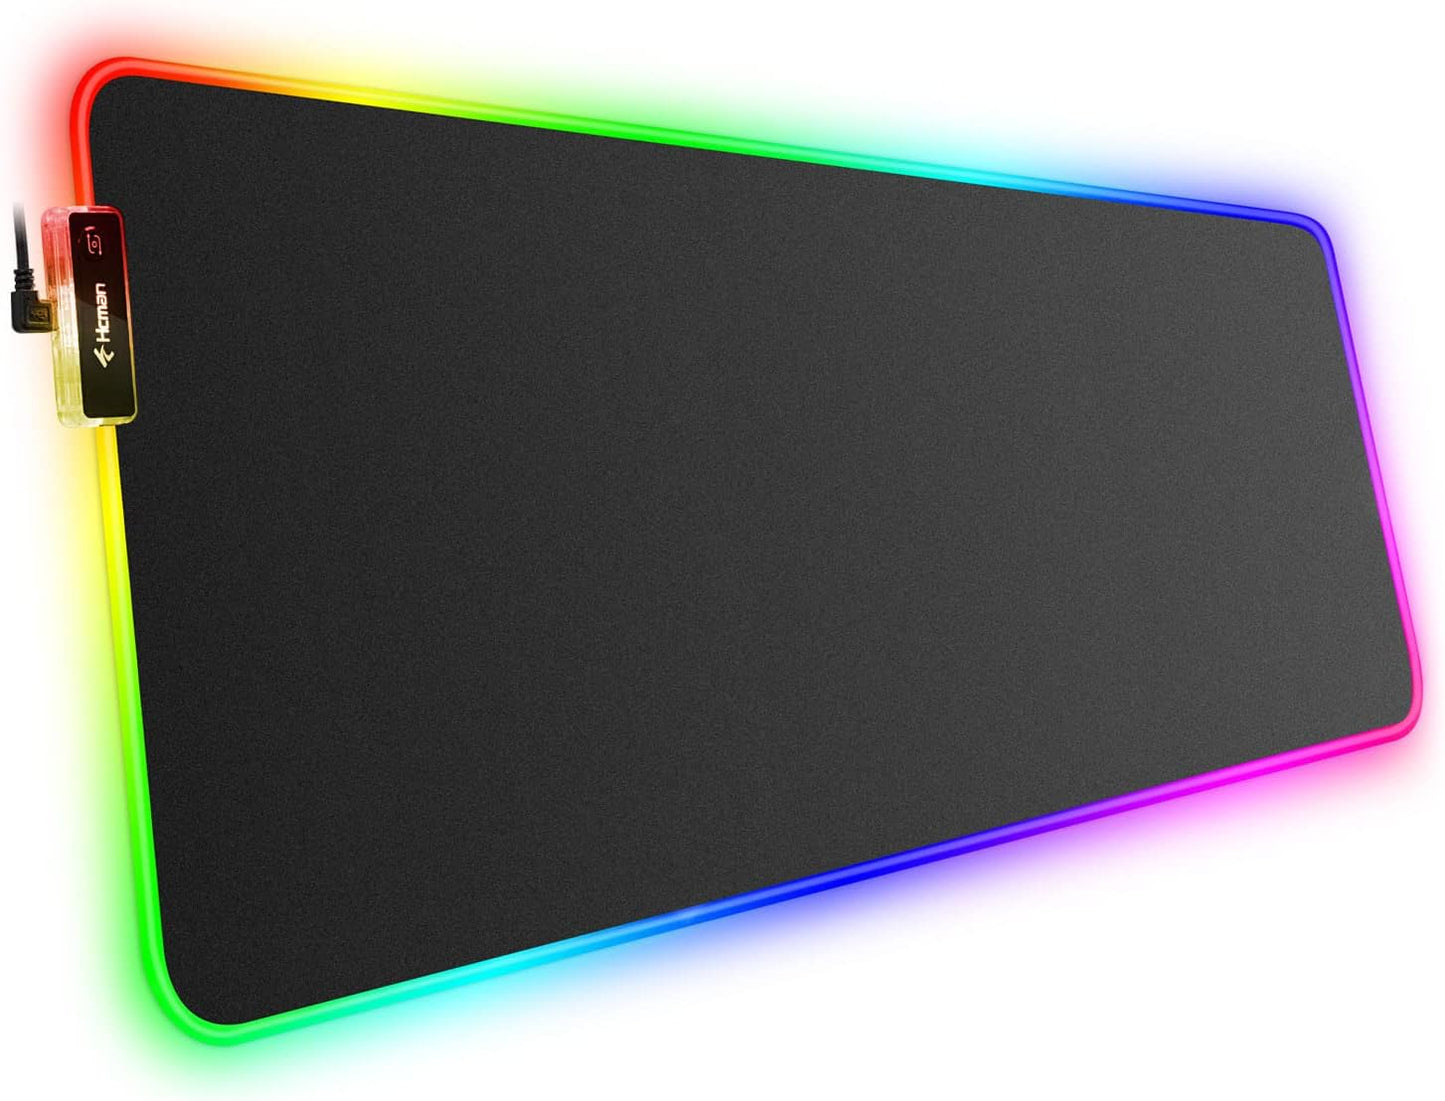 RGB Matte Black Deskmat